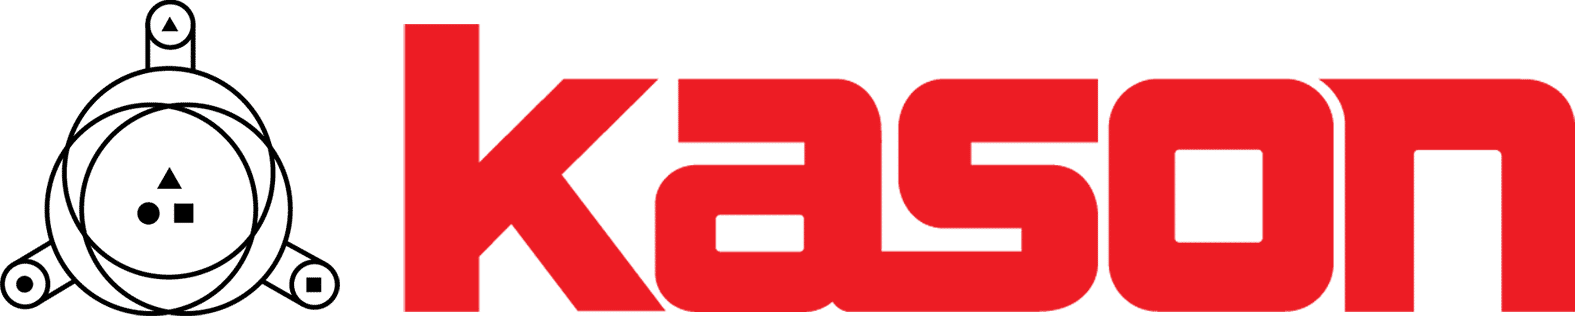 Kason logo